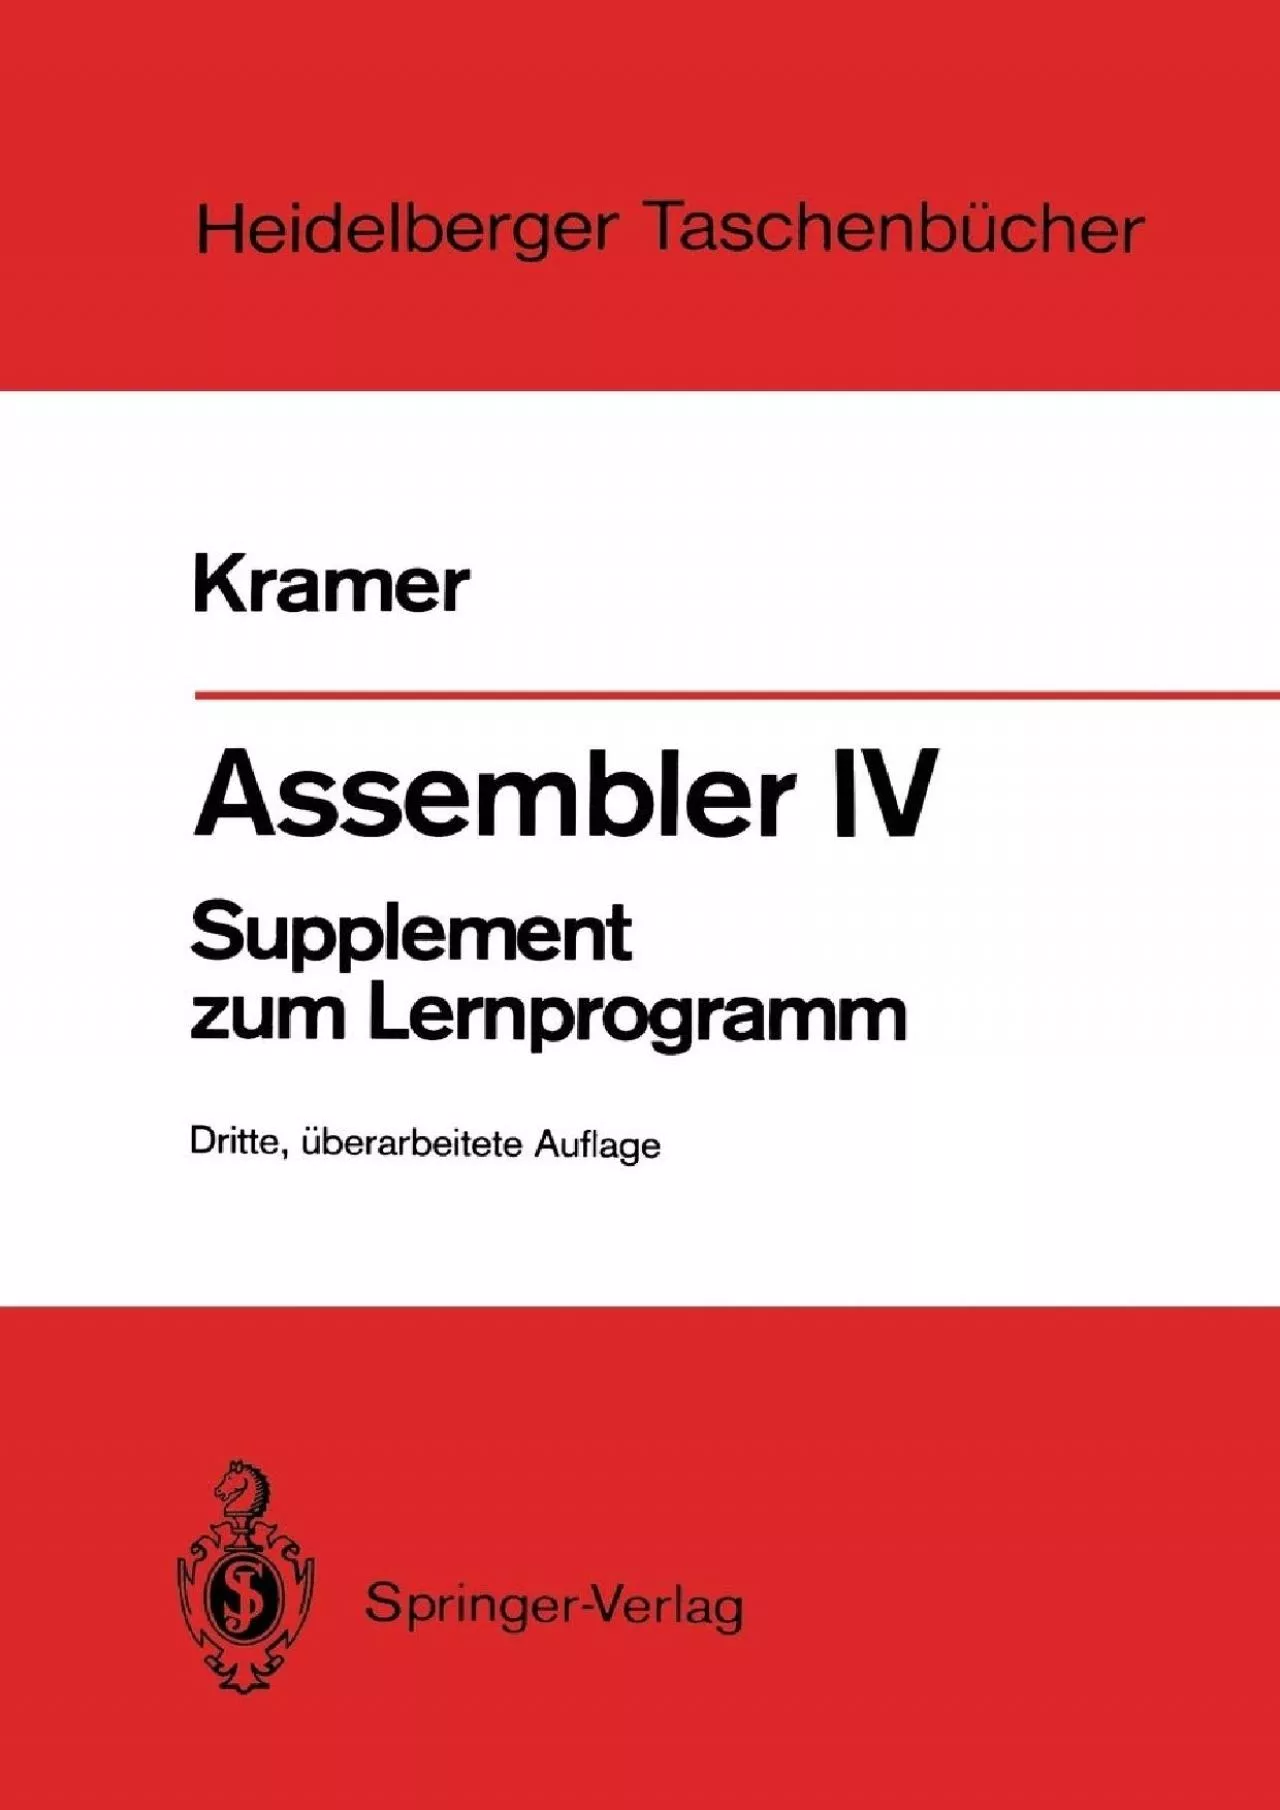 [DOWLOAD]-Assembler IV: Supplement zum Lernprogramm (Heidelberger Taschenbücher, 189)